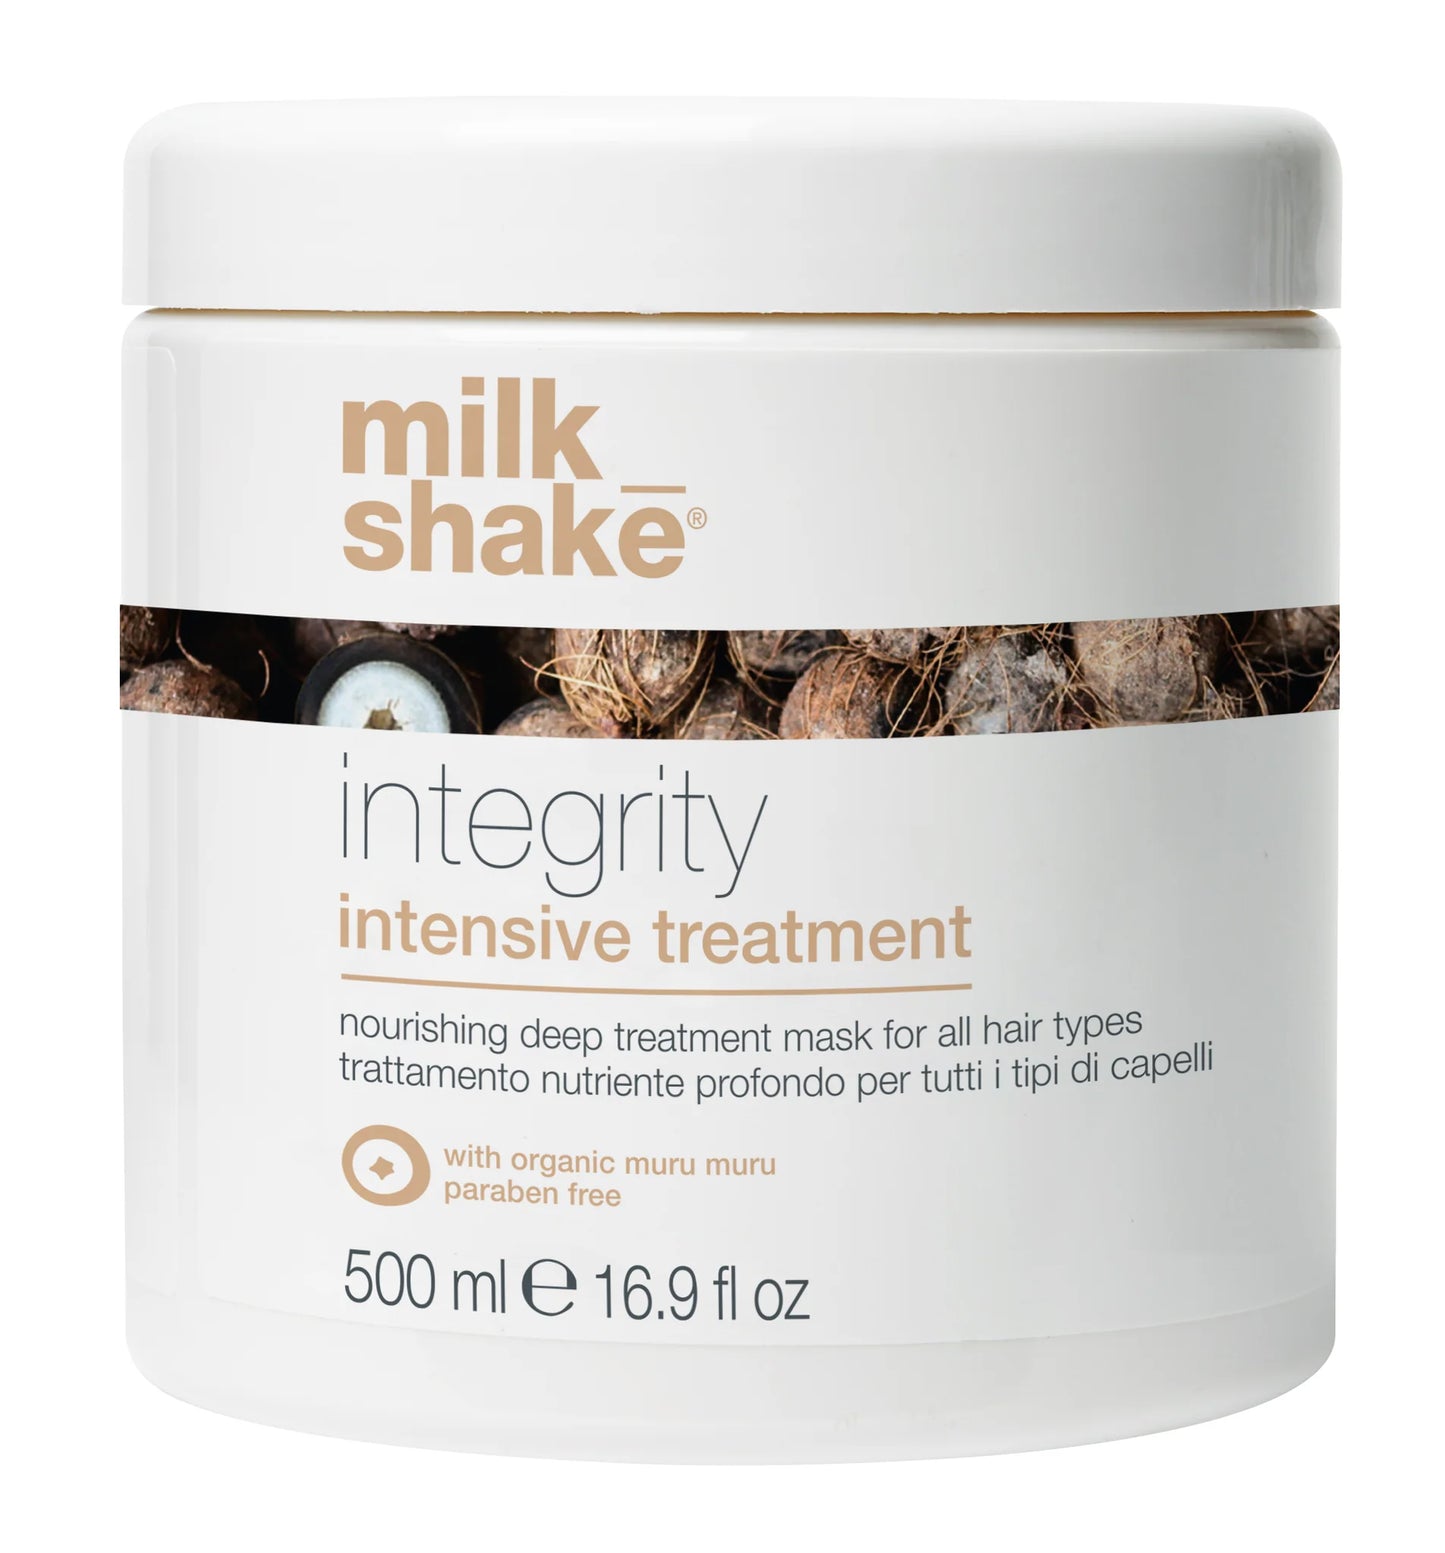 Integrity Intensive Treatment - milk_shake